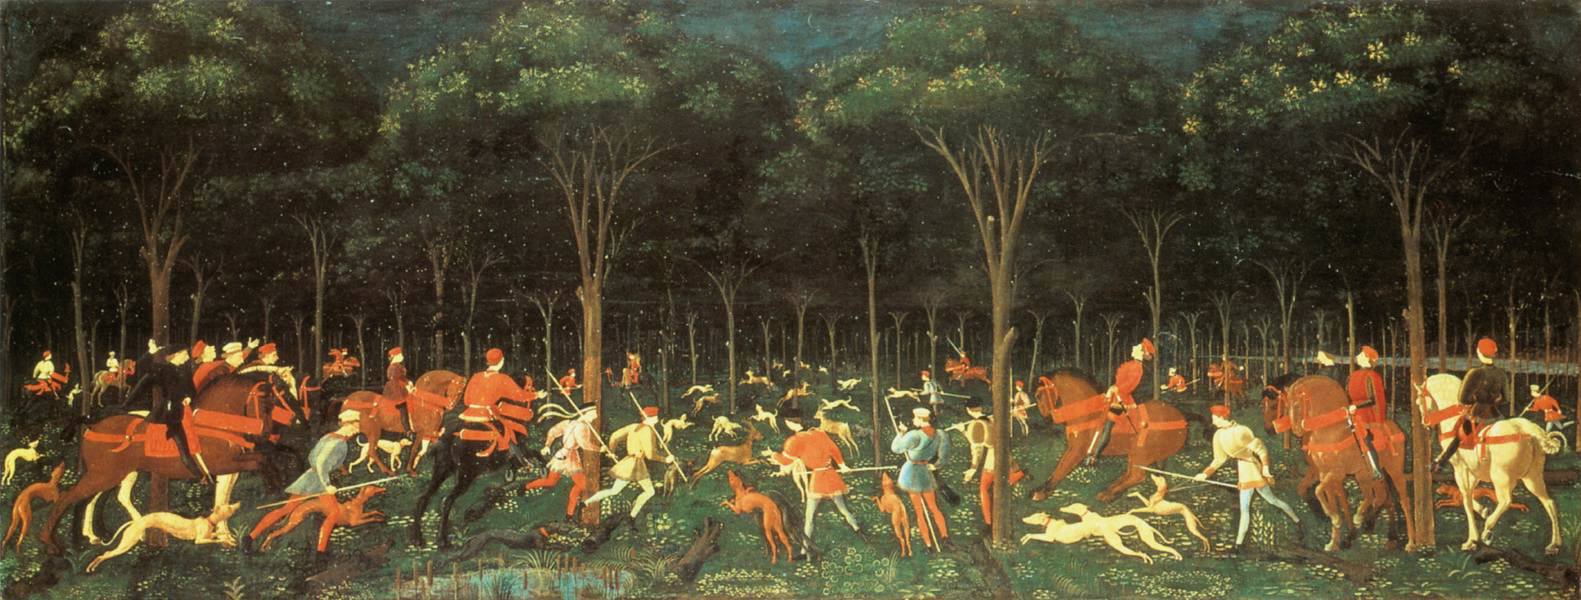 Die Jagd im Wald by Paolo Uccello - ca. 1470 - 65 cm × 165 cm Ashmolean Museum